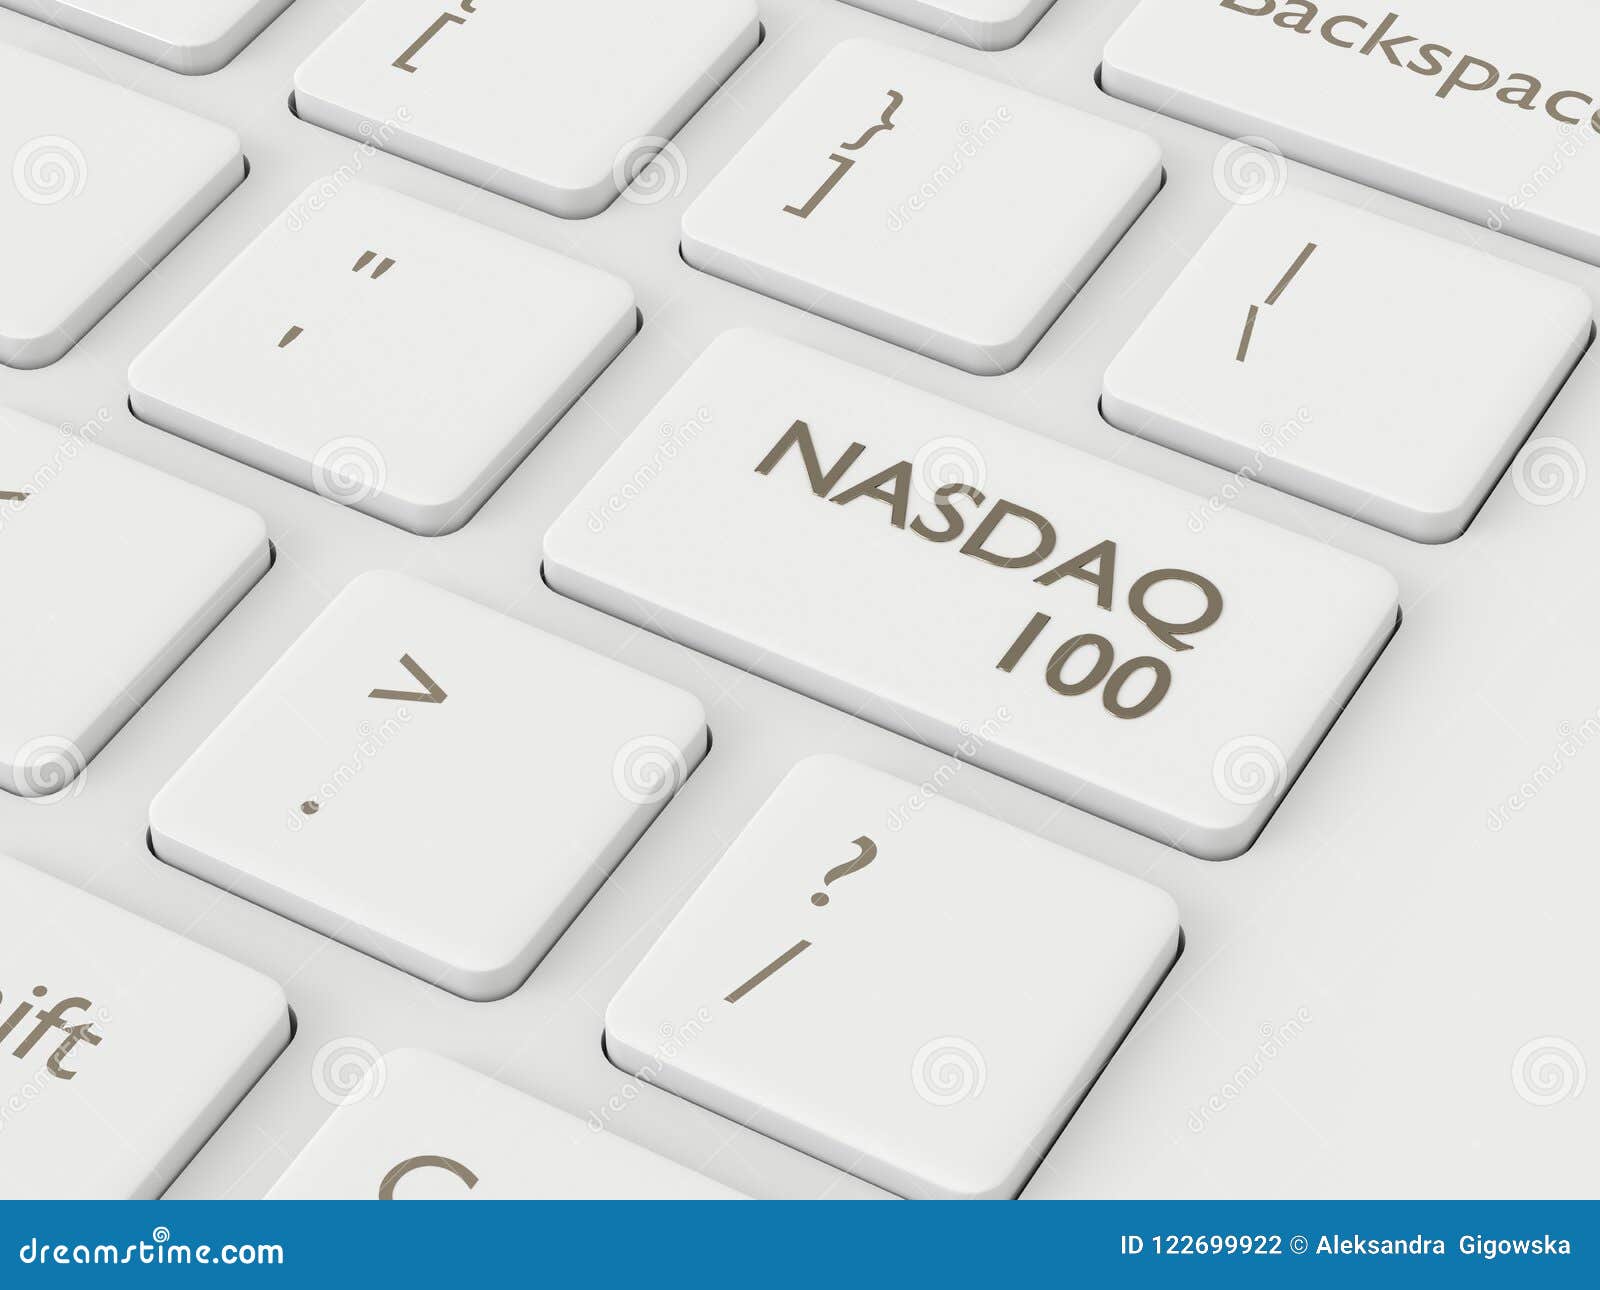 3d render of computer keyboard with nasdaq 100 index button